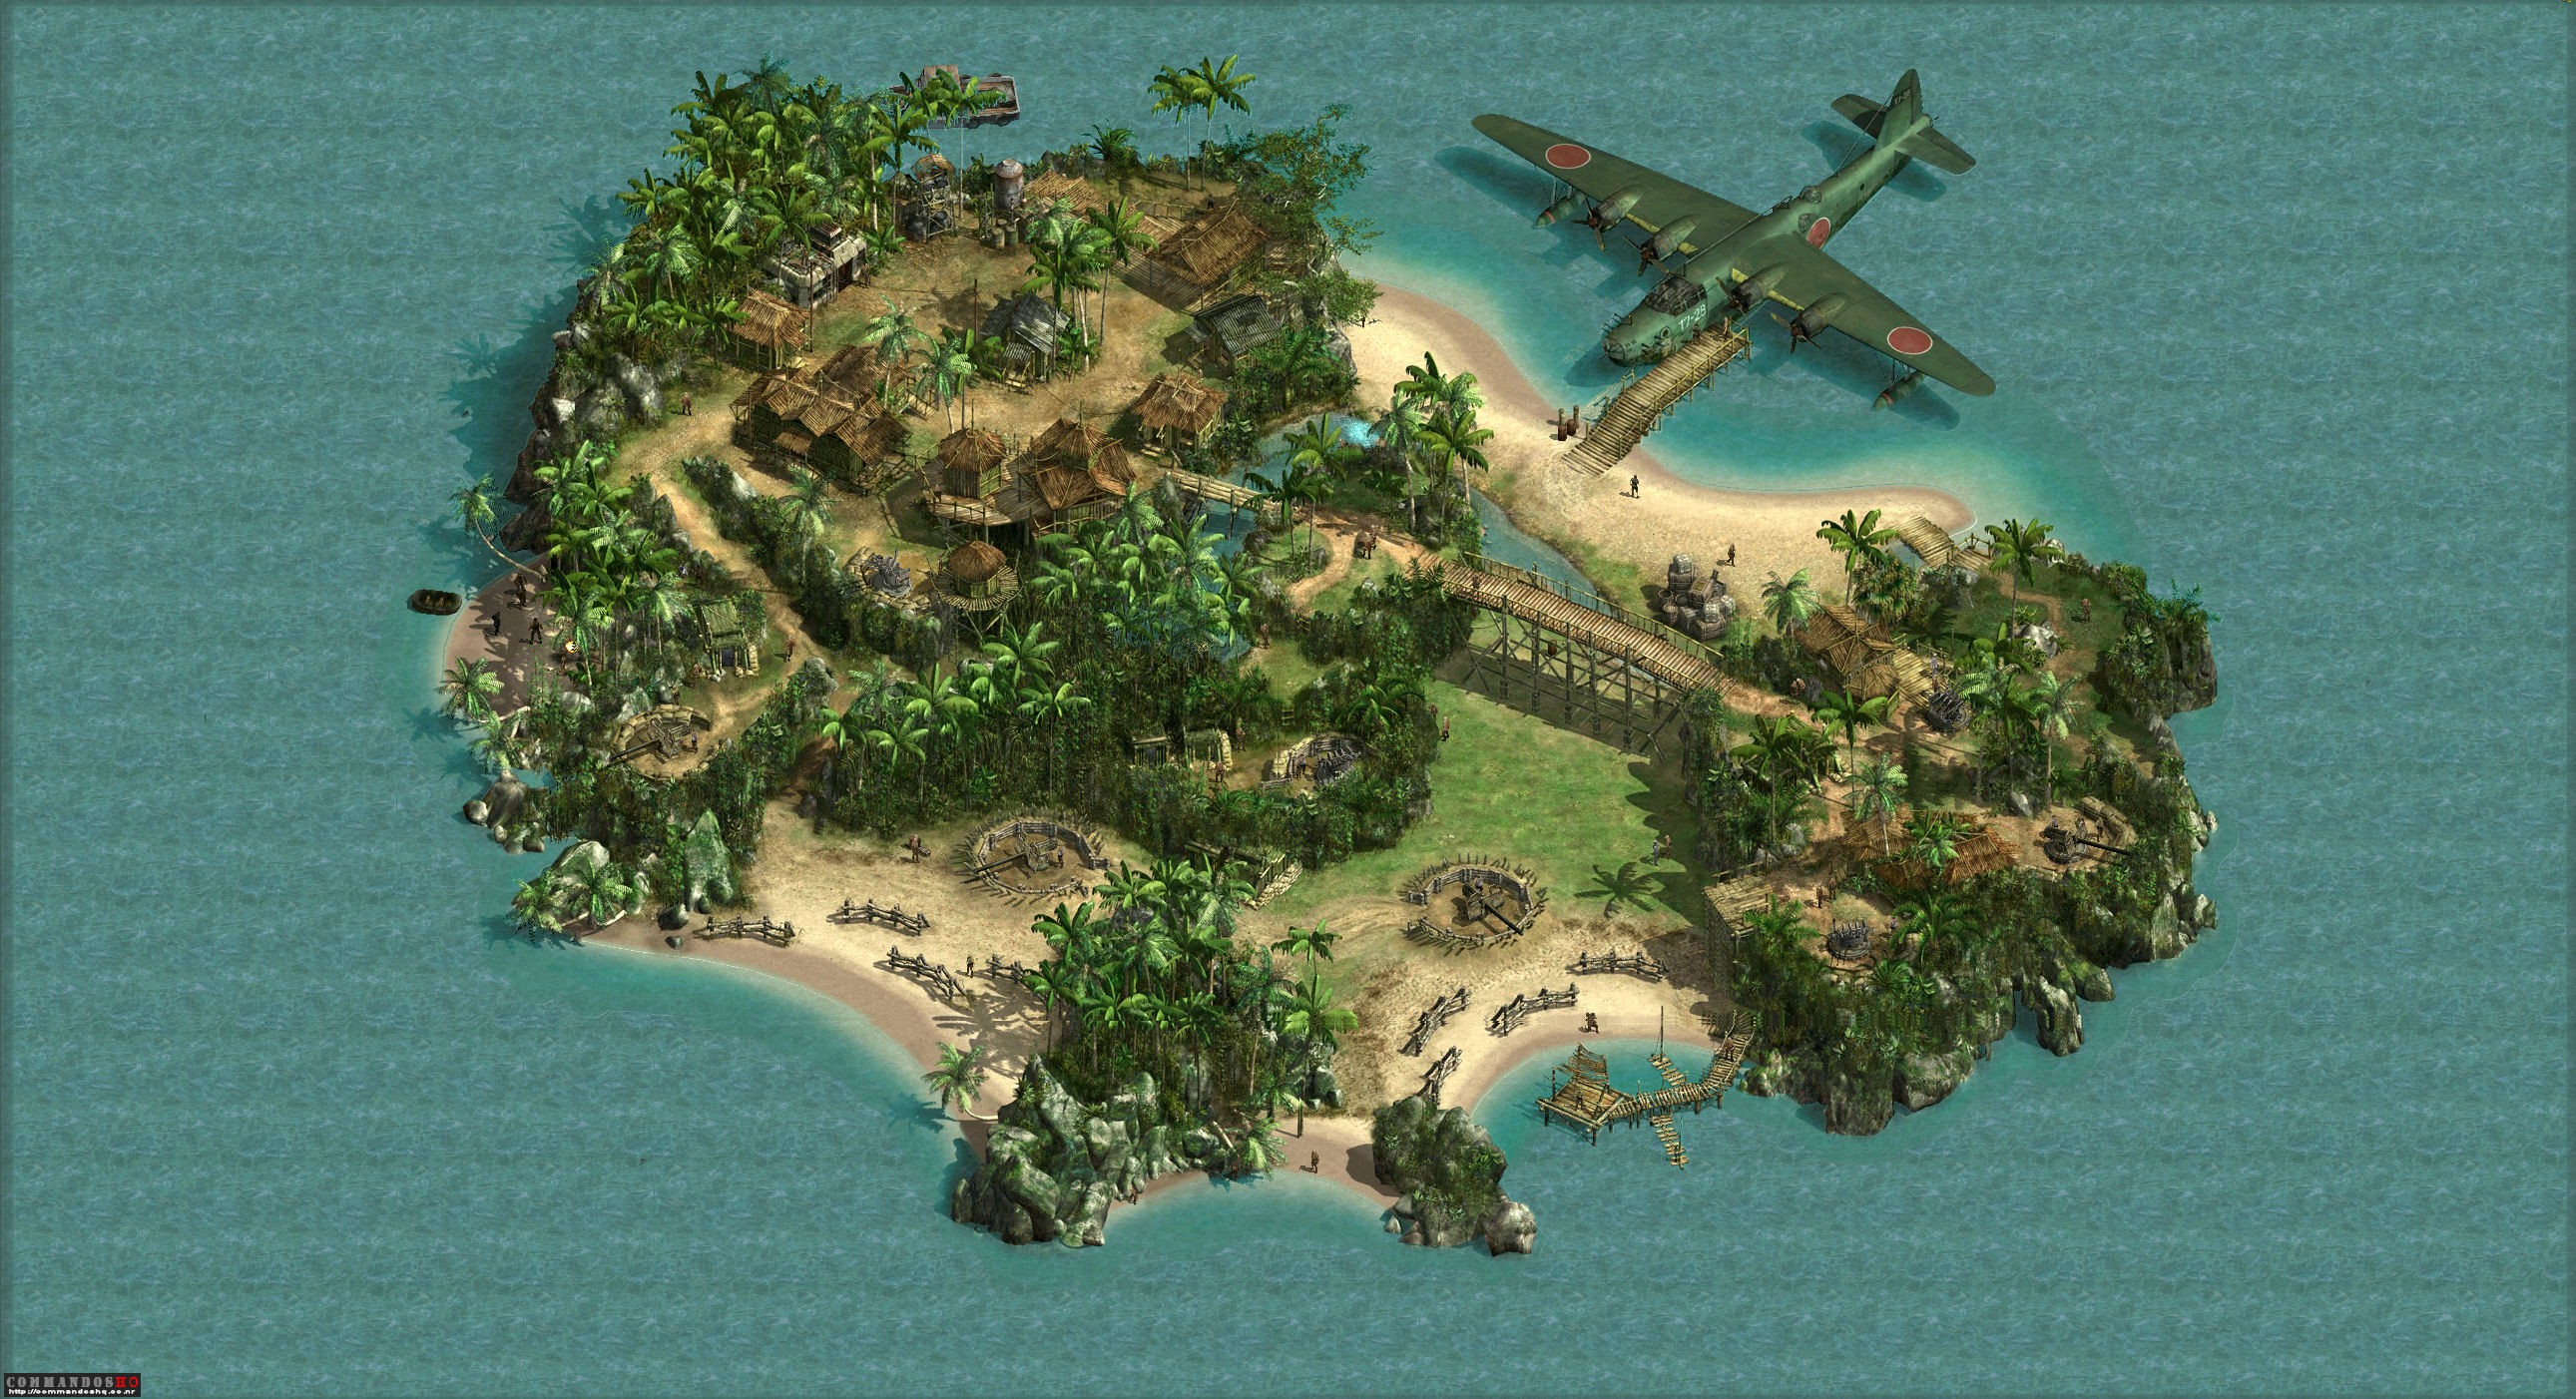 General 2581x1402 retro games video games video game art Commandos (Game) island aerial view airplane palm trees